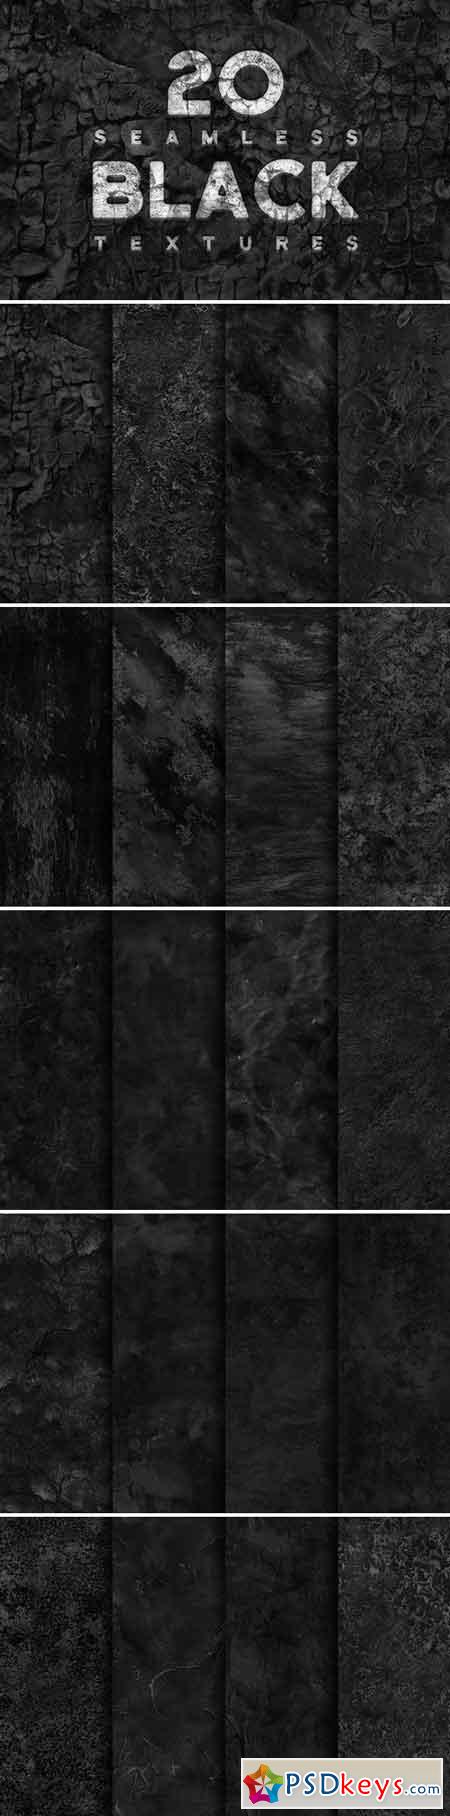 20 Seamless Black Textures 1885197